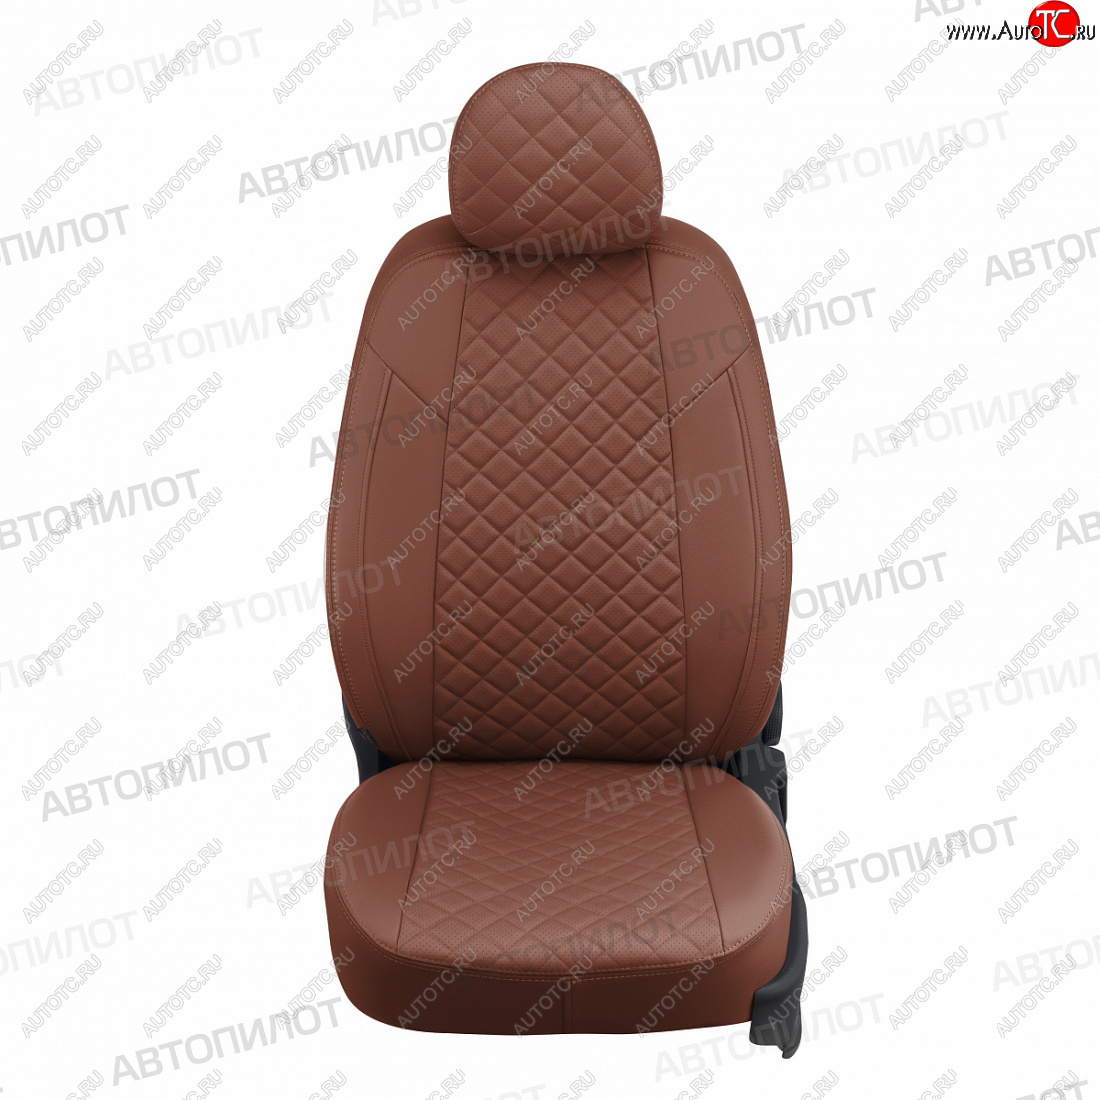 7 799 р. Чехлы сидений (экокожа) Автопилот Ромб  KIA Ceed  2 JD (2012-2018) (коричневый)